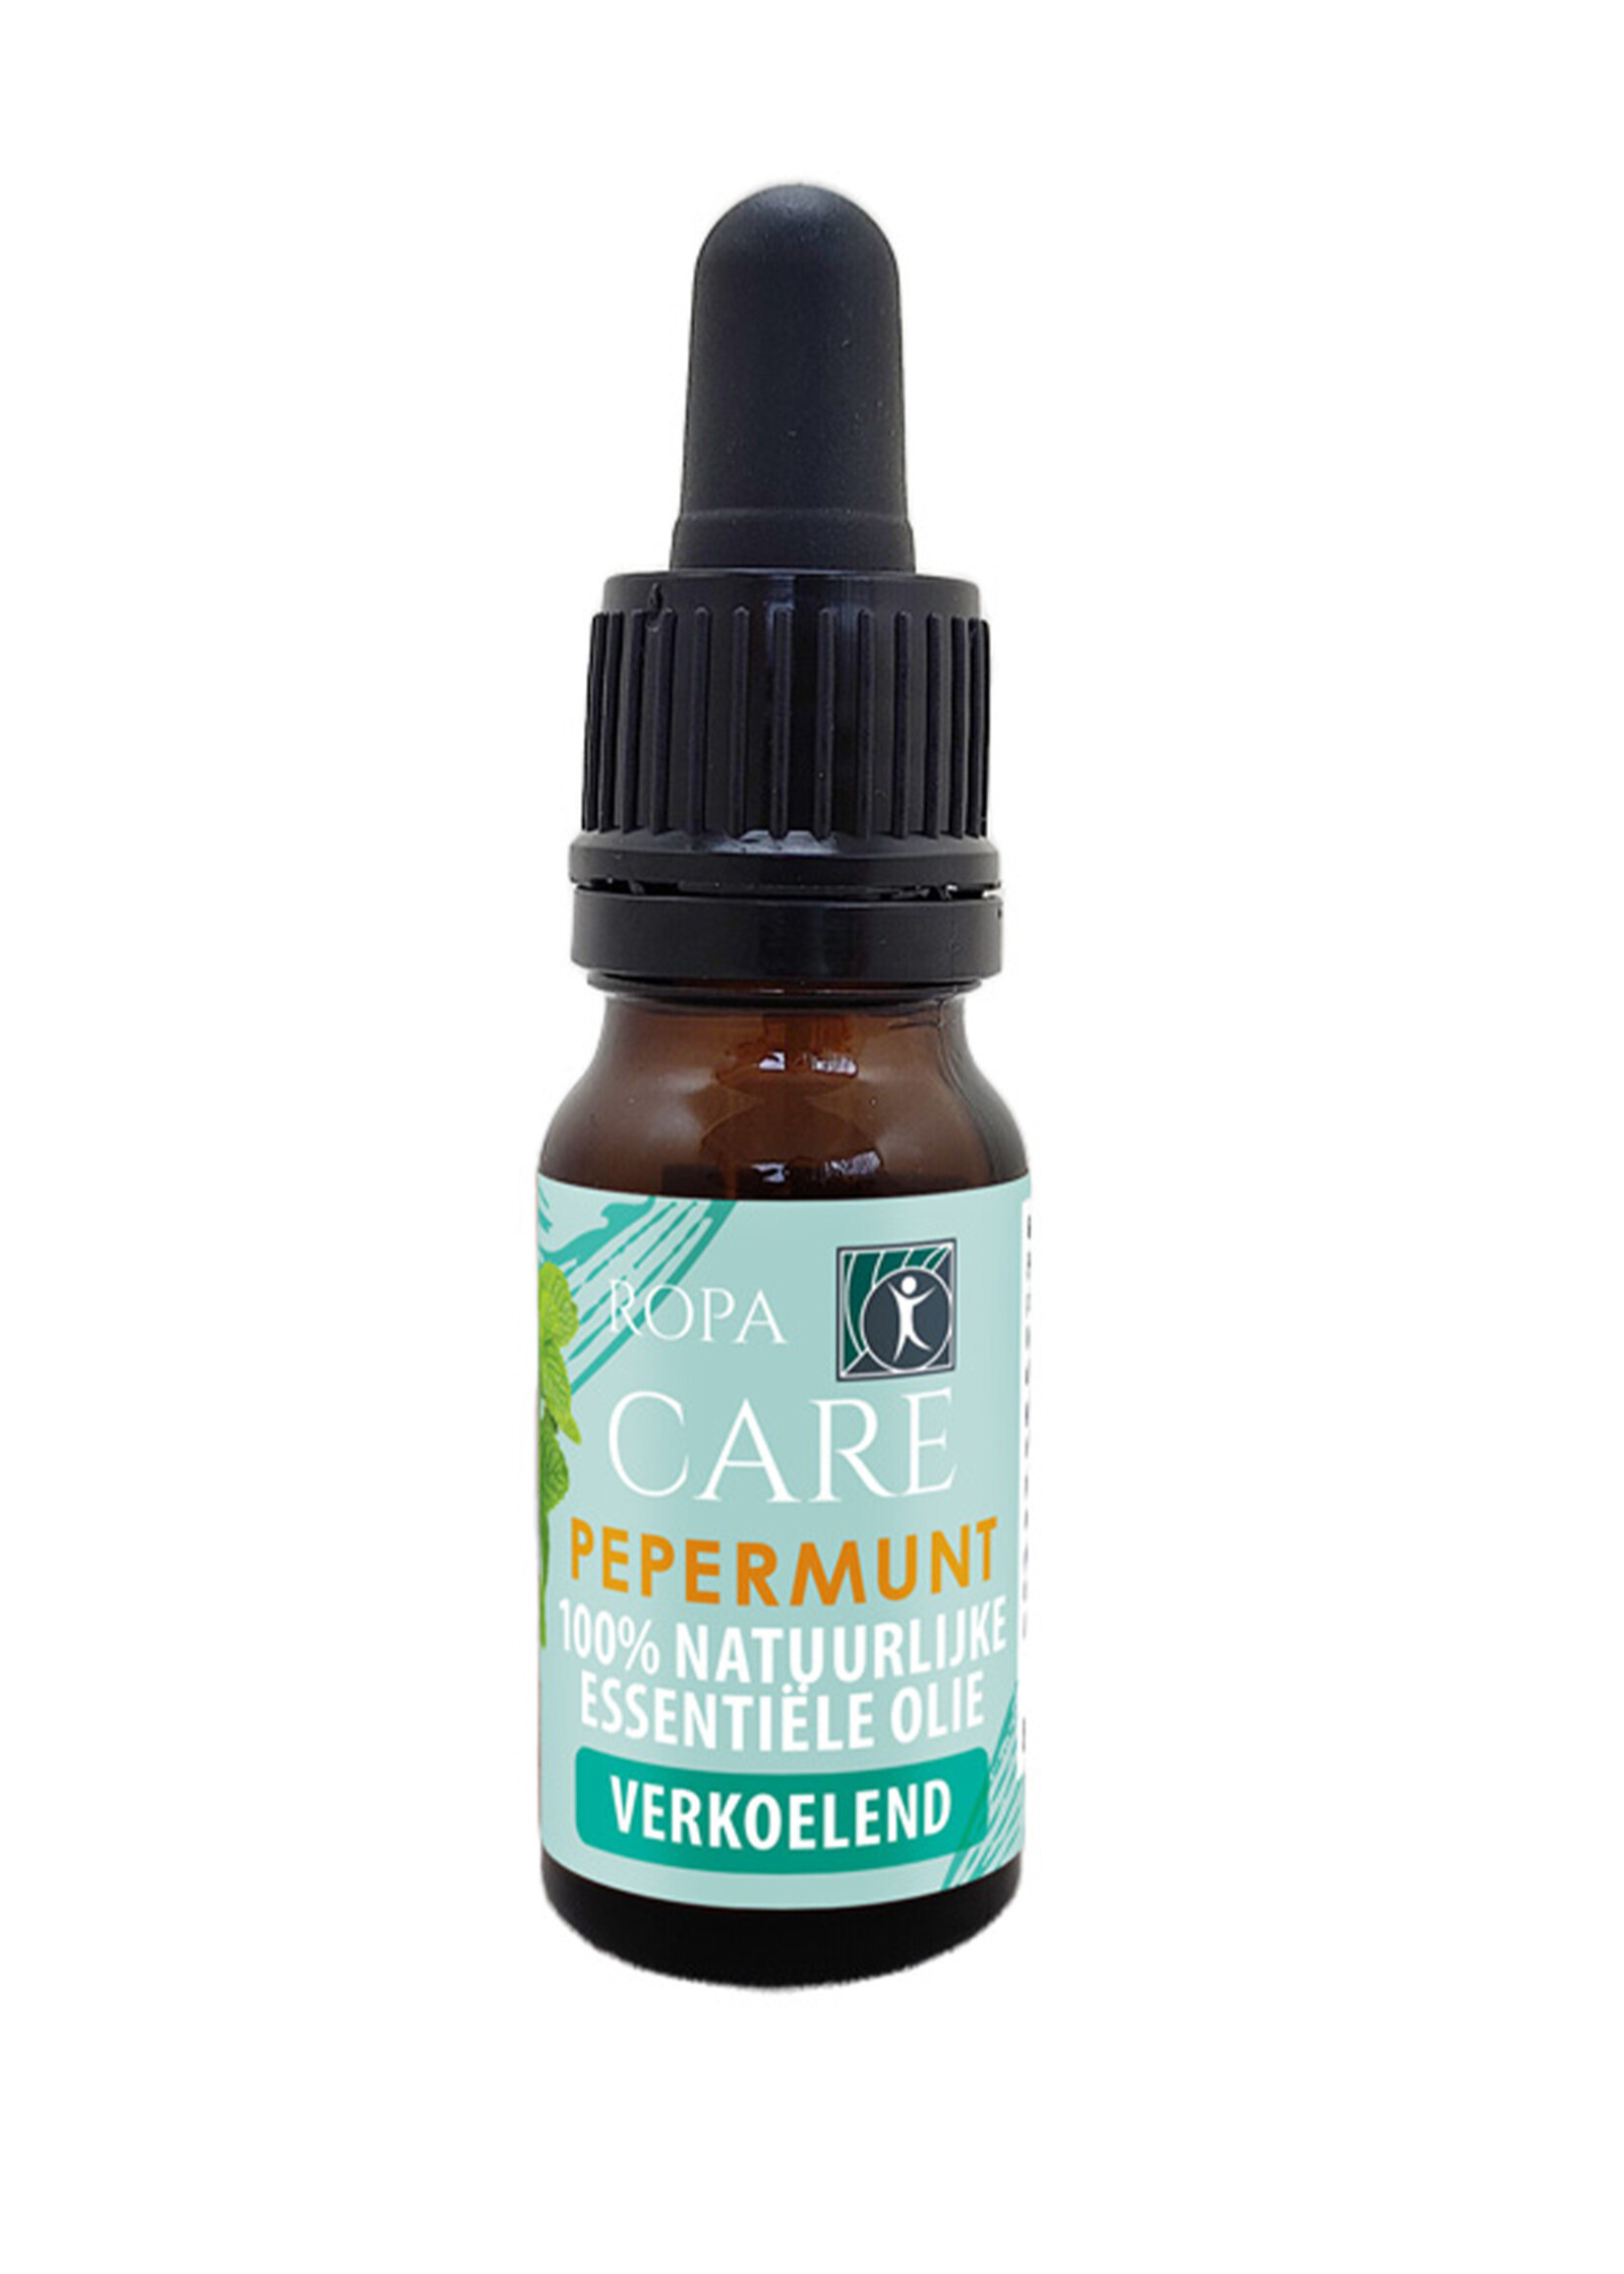 RopaCare Peppermint essential oil - 10ml